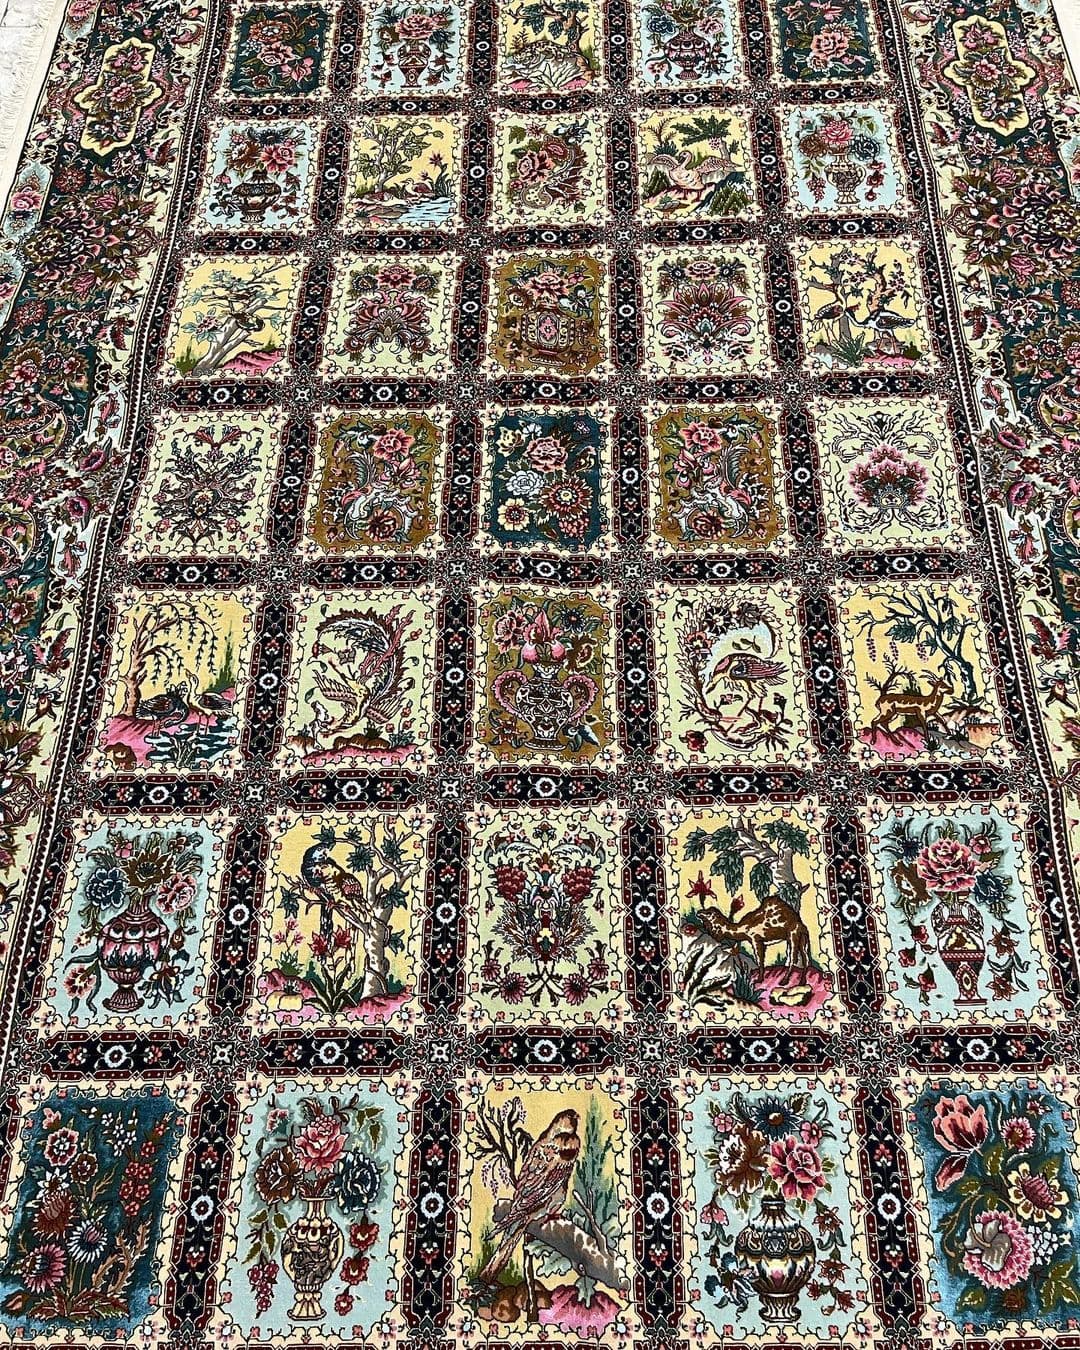 Modern carpets